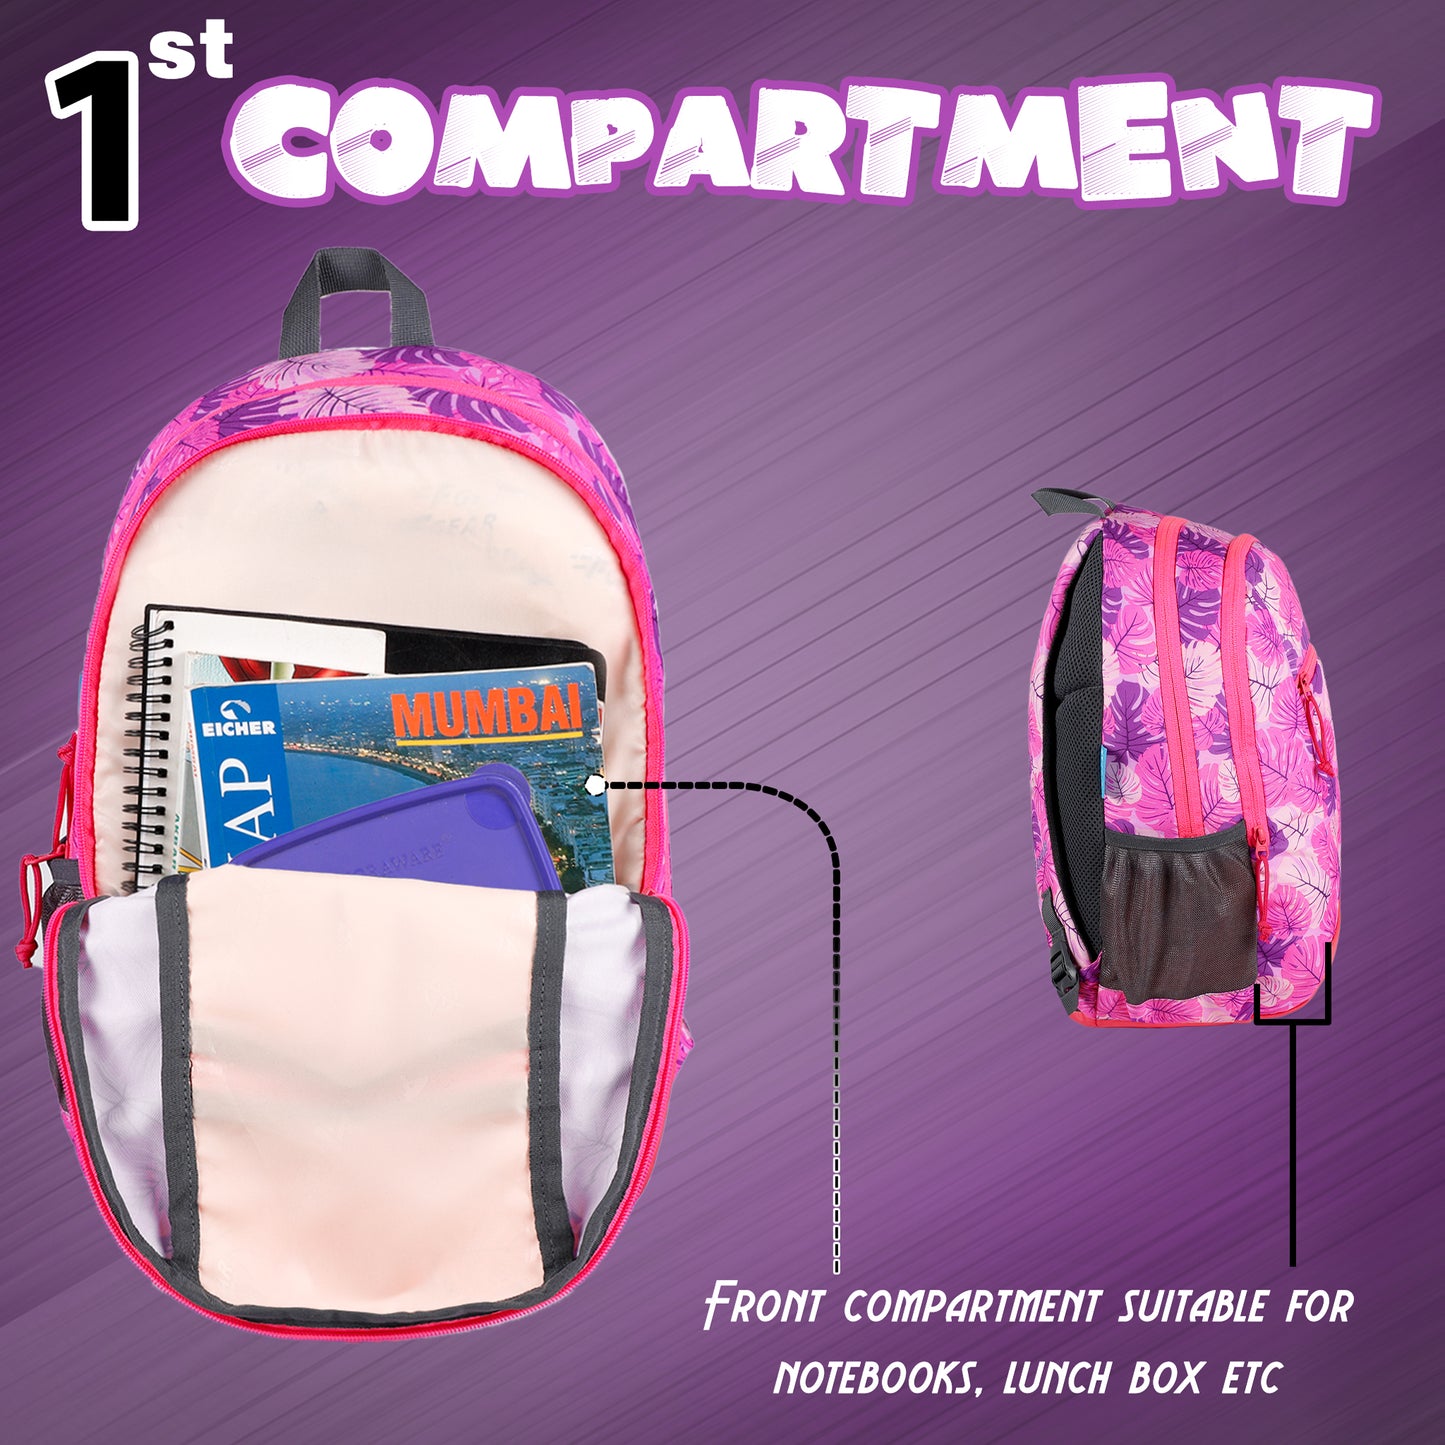 Ellis 17L Tropical pink and purple Backpack